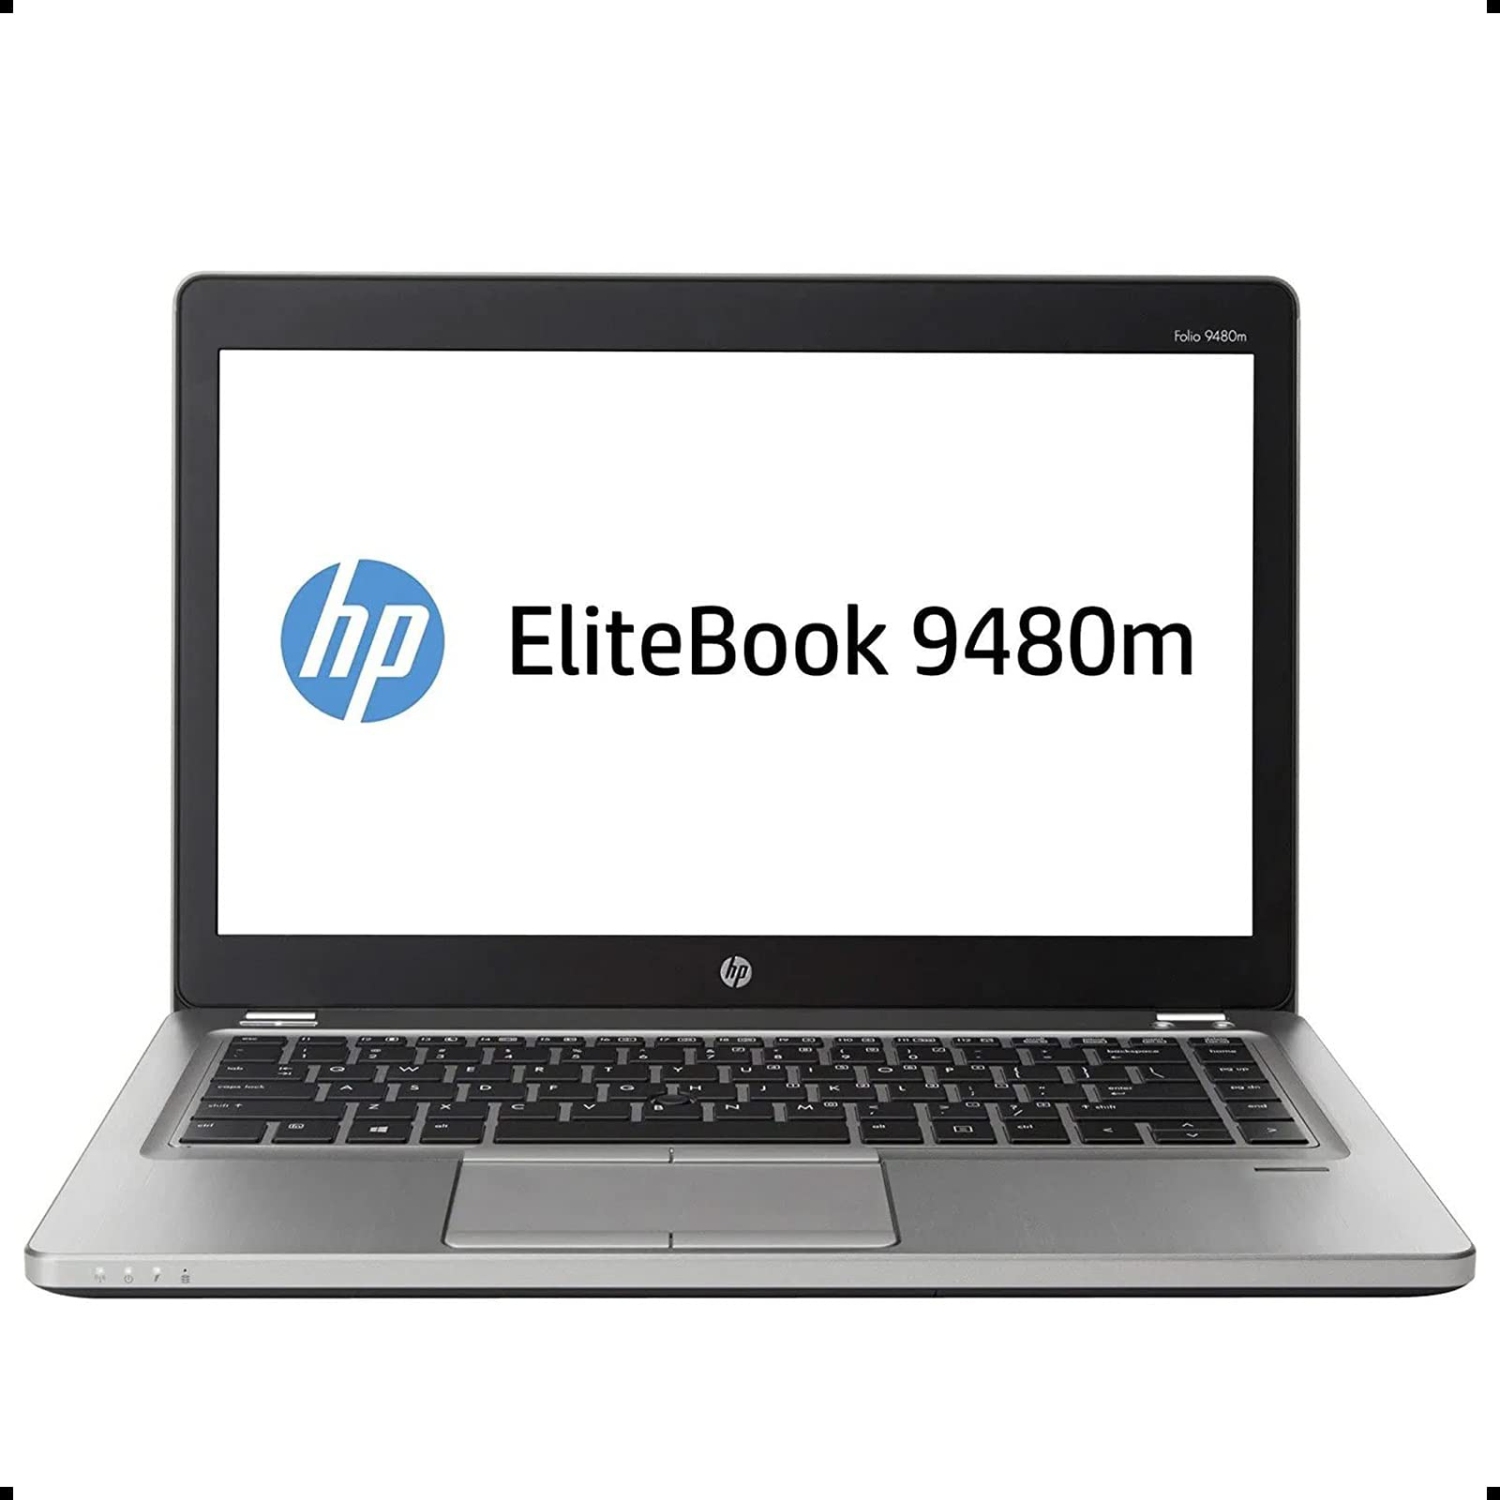 Refurbished (Good) - HP EliteBook Folio 9480m Notebook PC 8GB RAM 500GB HDD Hard drive 14" Screen 1366x768 Webcam Backlit Keyboard Non Touch Windows 10 English